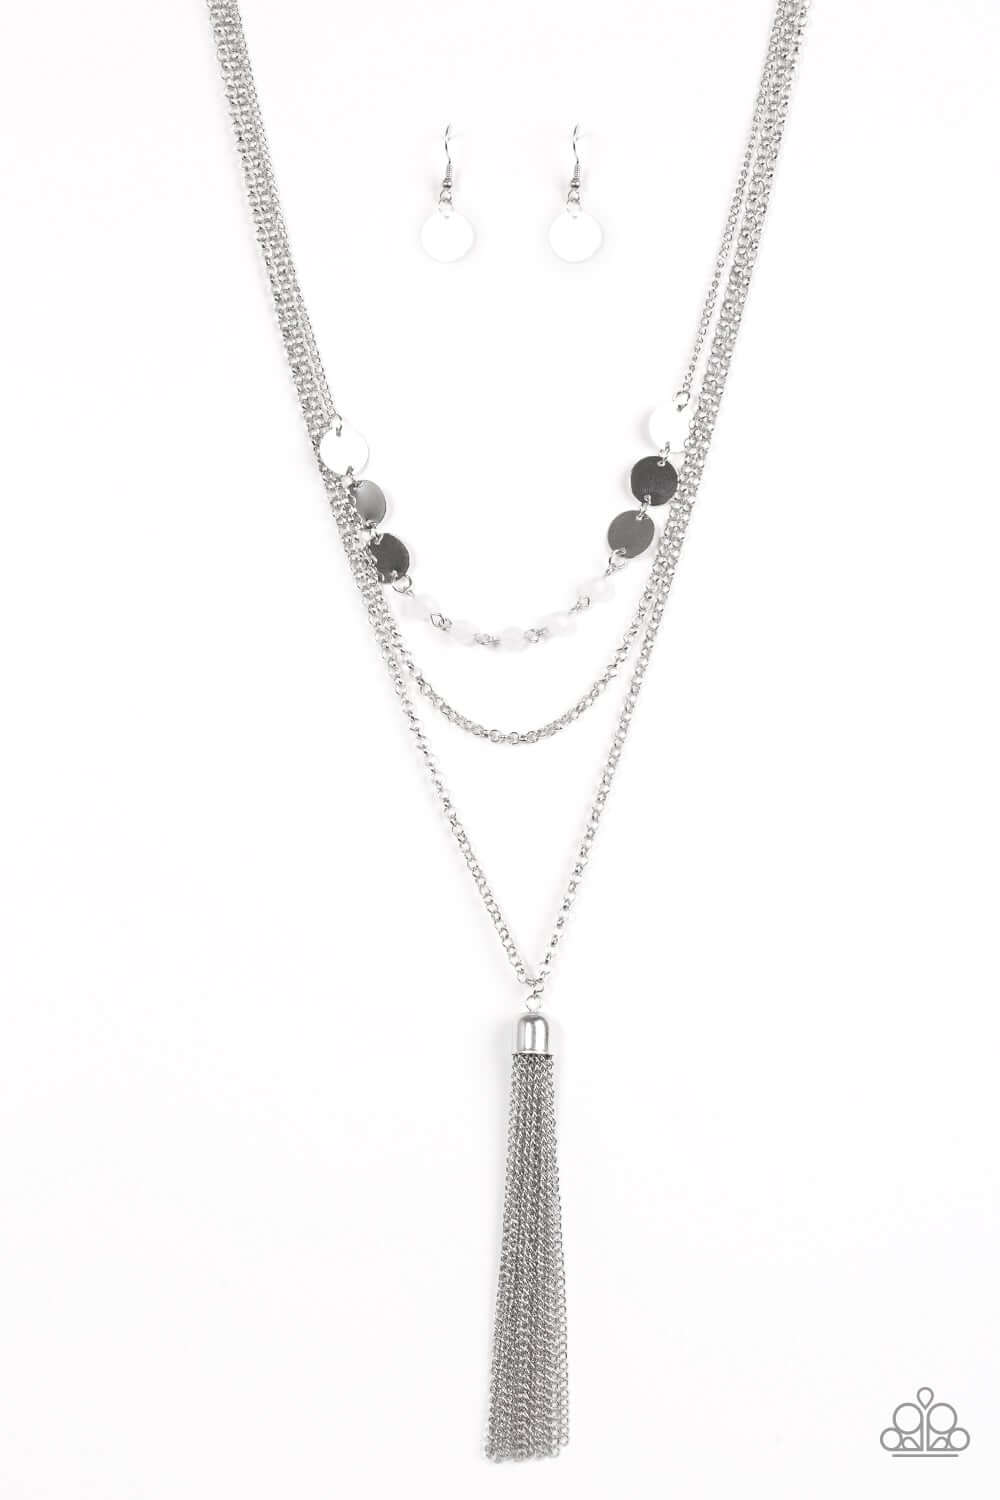 Paparazzi Accessories  - Celebration of Chic #L111 - Silver Necklace